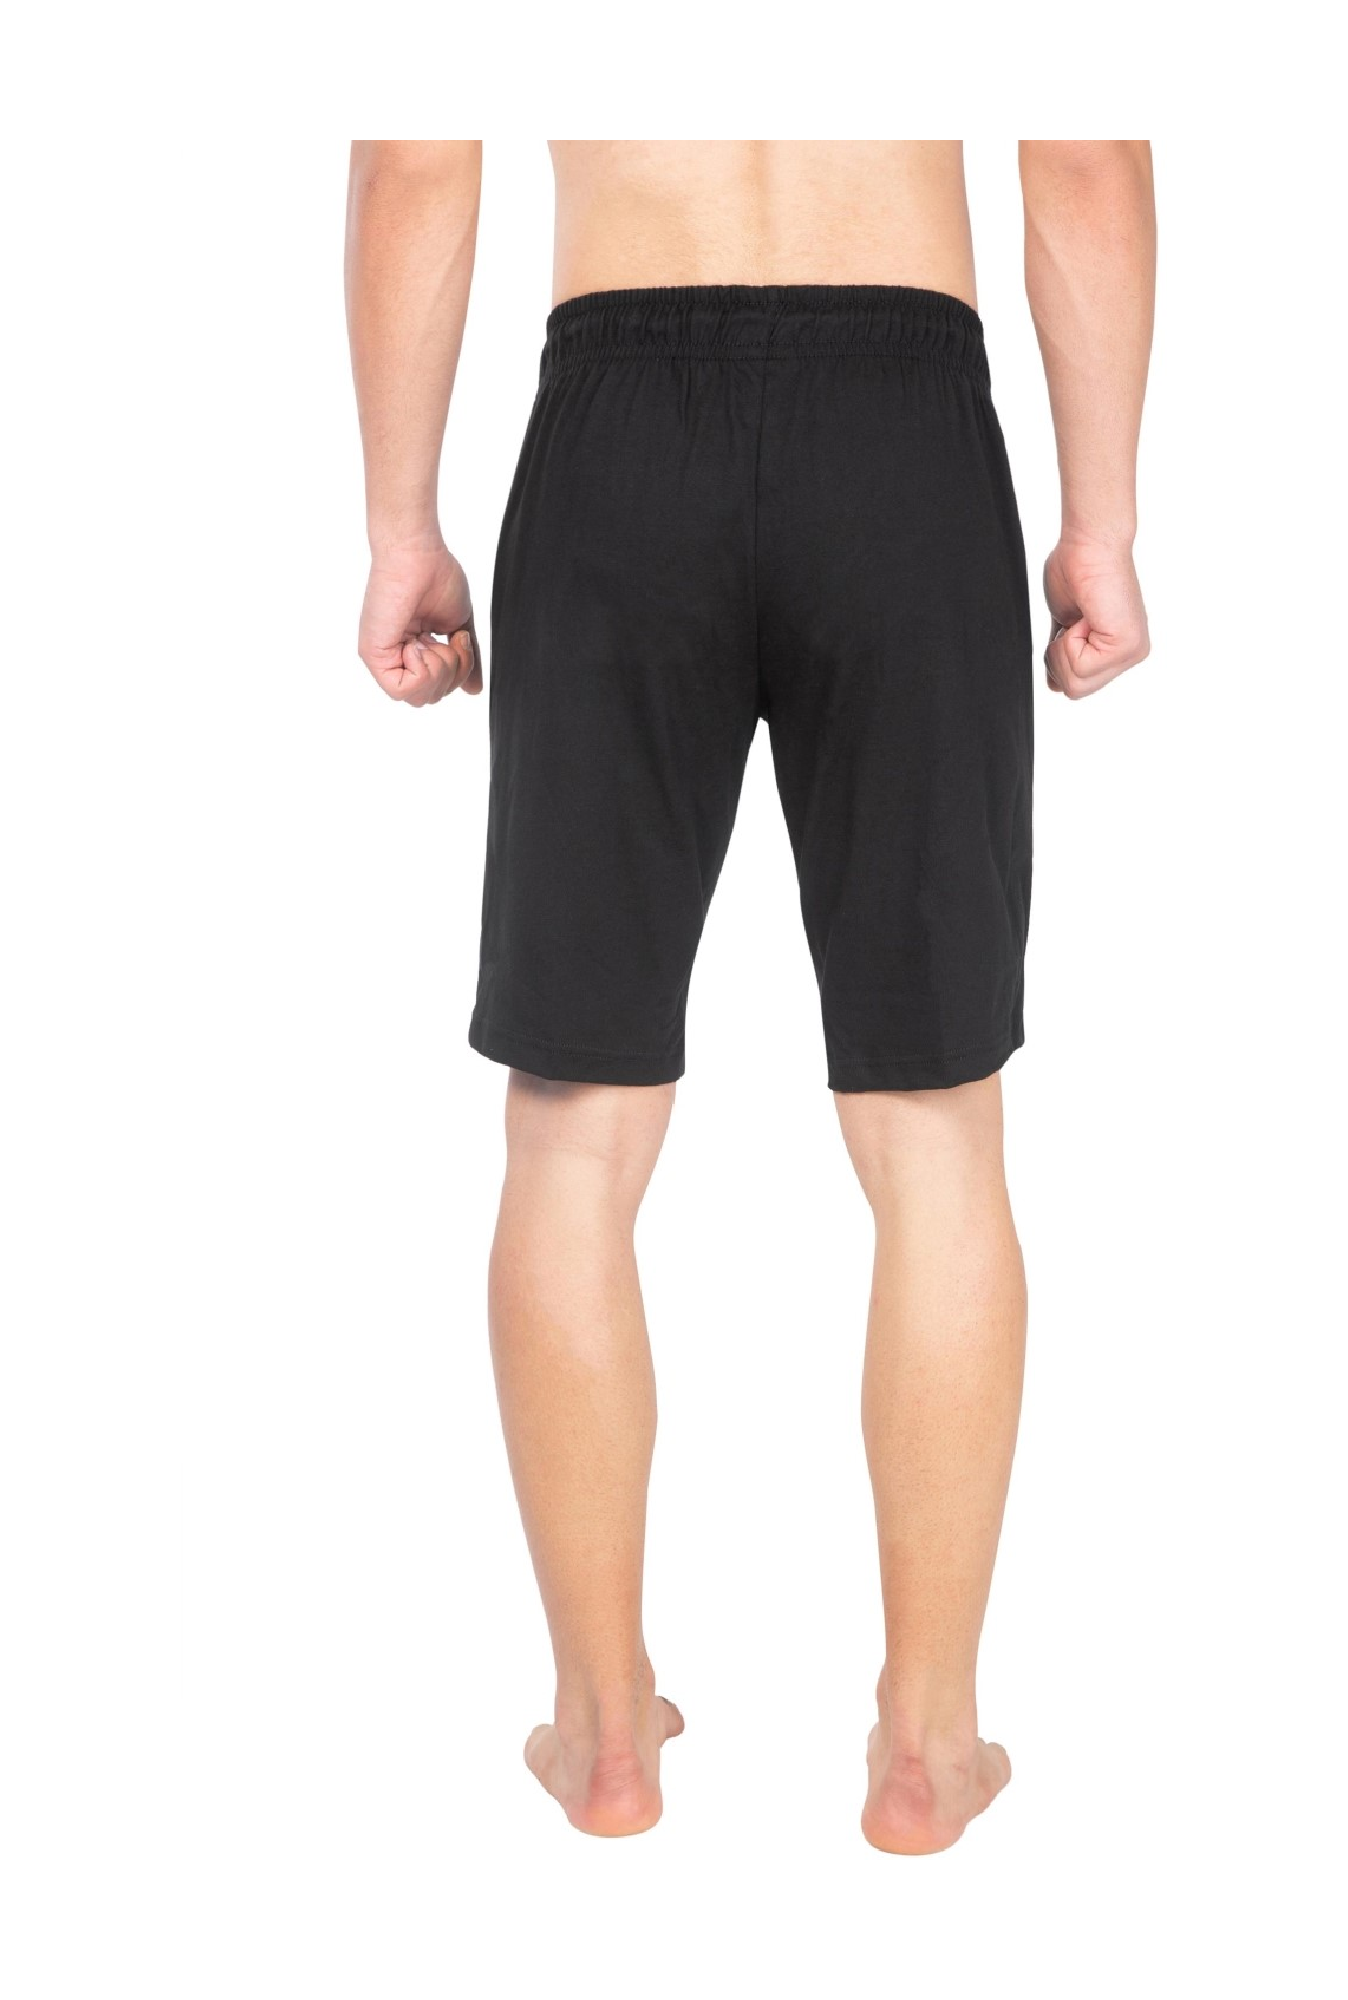 JOCKEY Printed Men Black Sports Shorts - Buy JOCKEY Printed Men Black  Sports Shorts Online at Best Prices in India